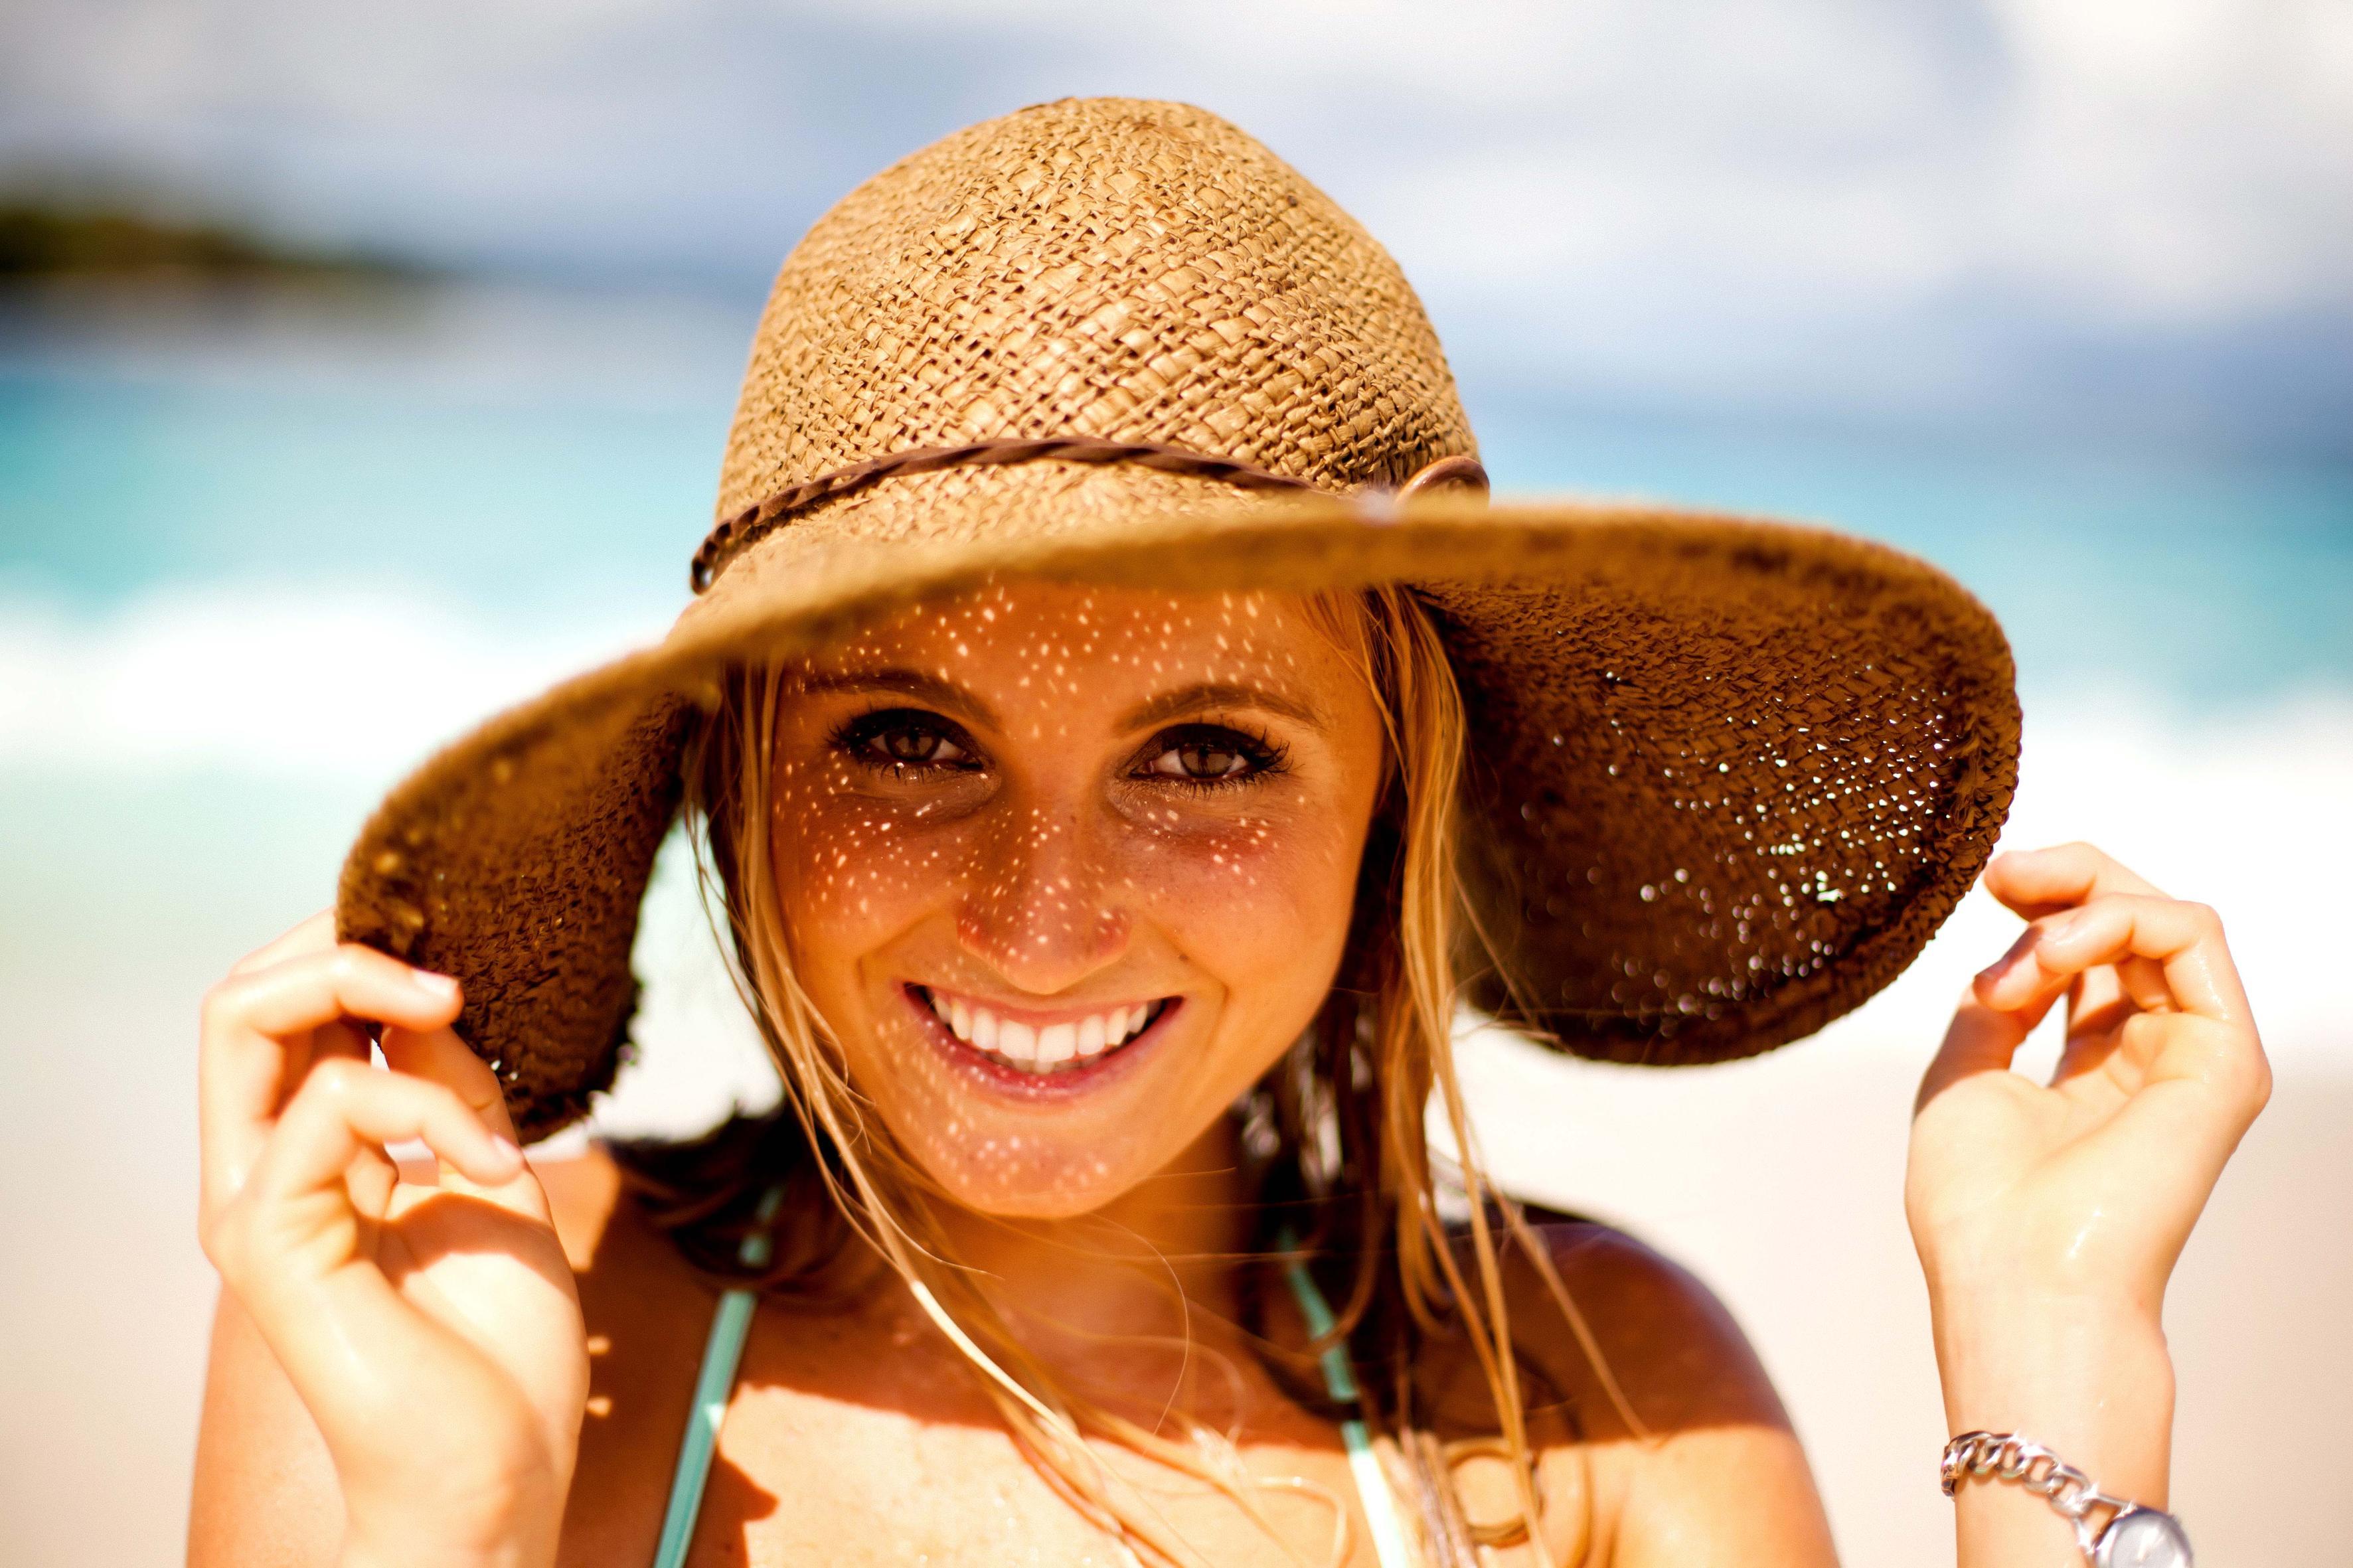 sports, alana blanchard, american, face, smile, straw hat, sunny, surfer